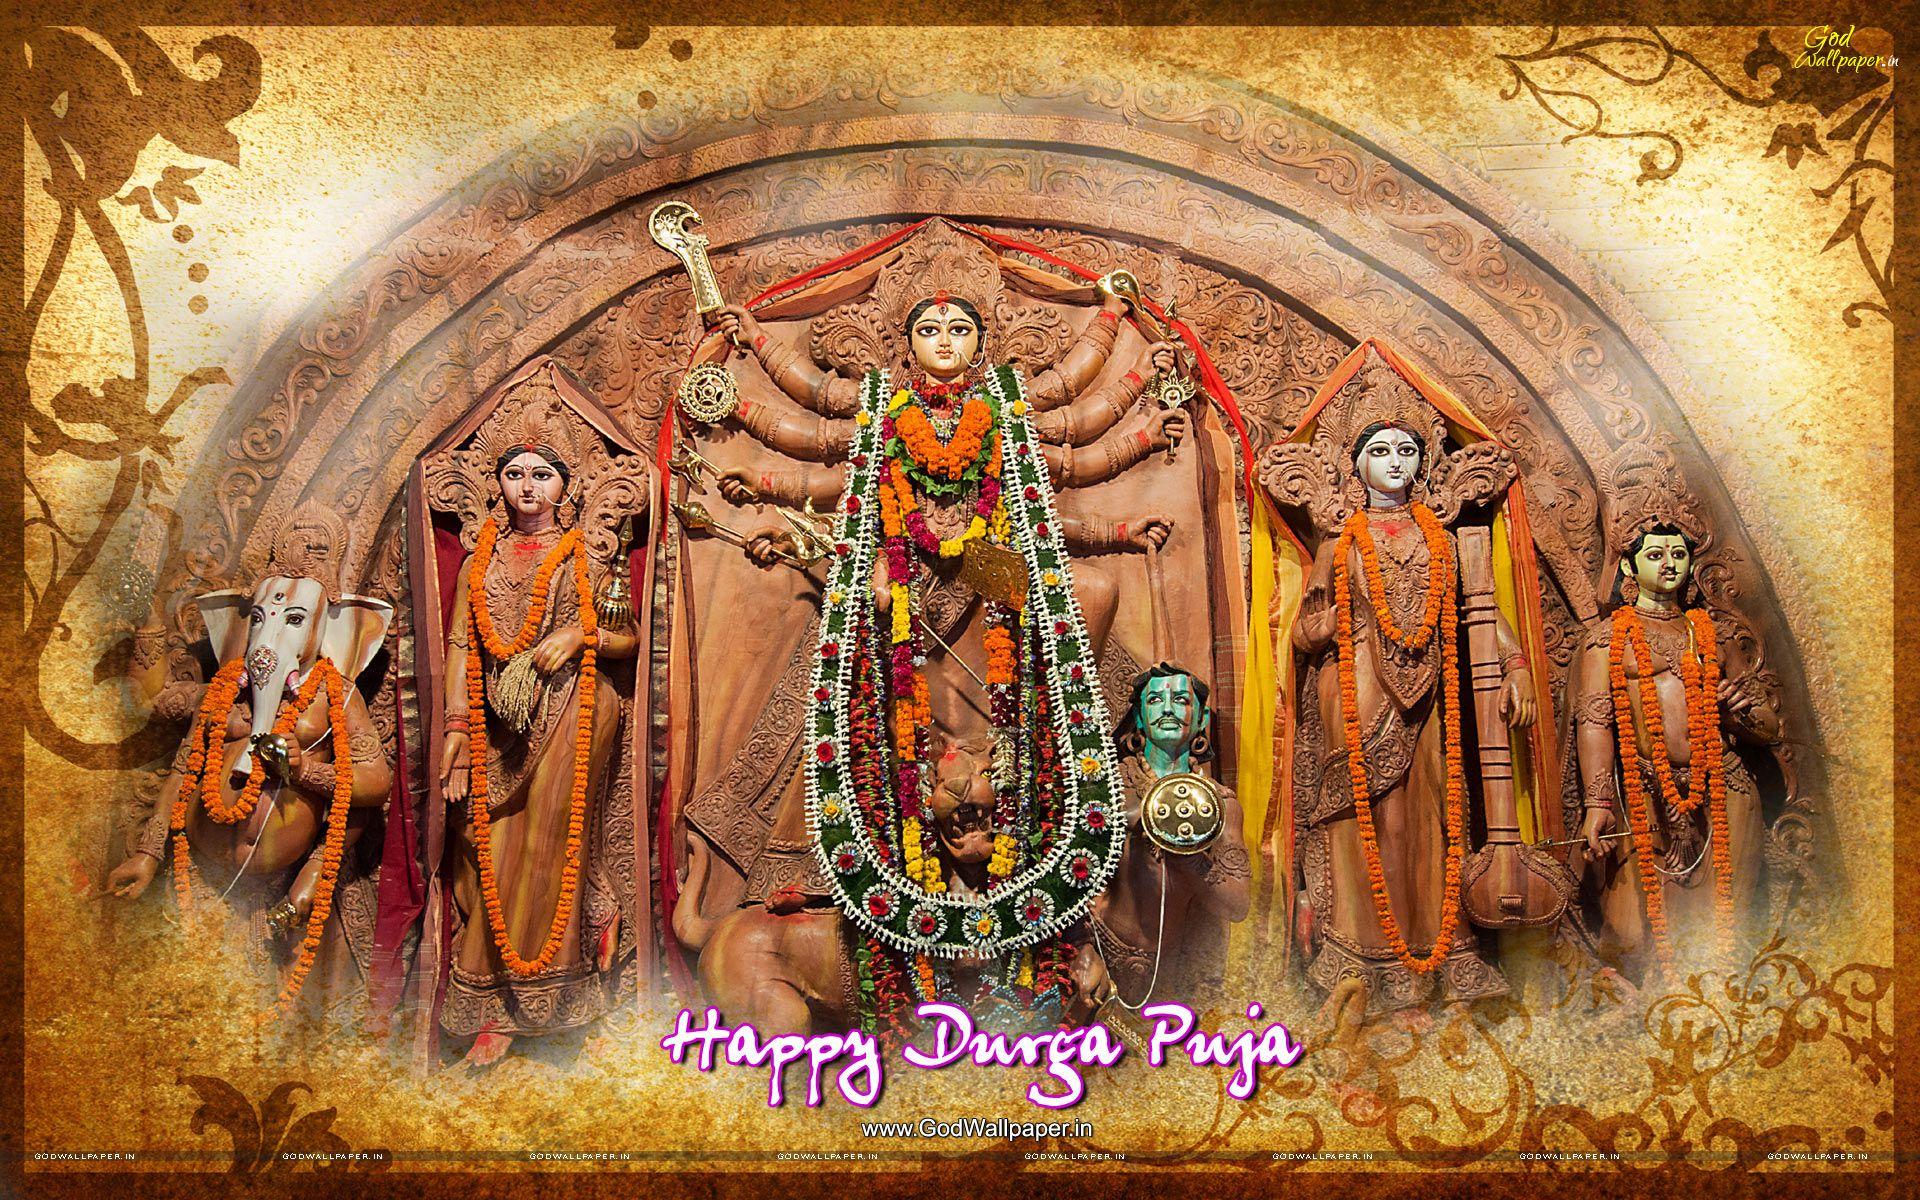 Durga Puja HD Wallpaper for Desktop & Facebook